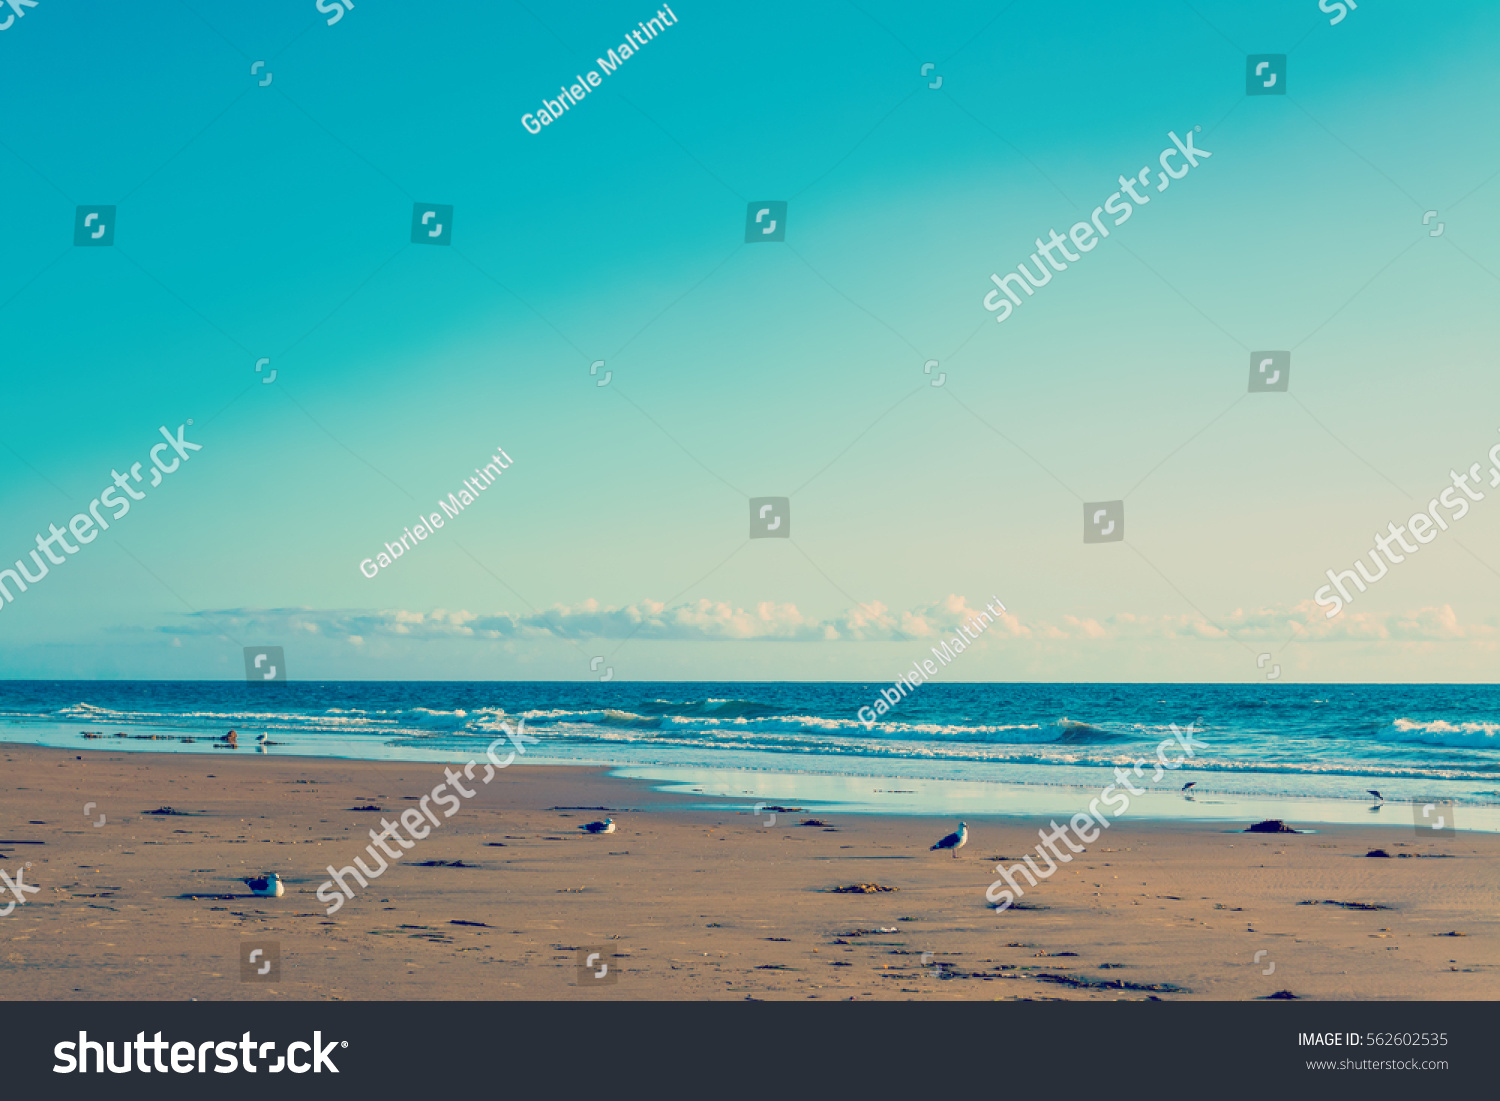 Seagulls by the sea in Newport Beach, California #562602535